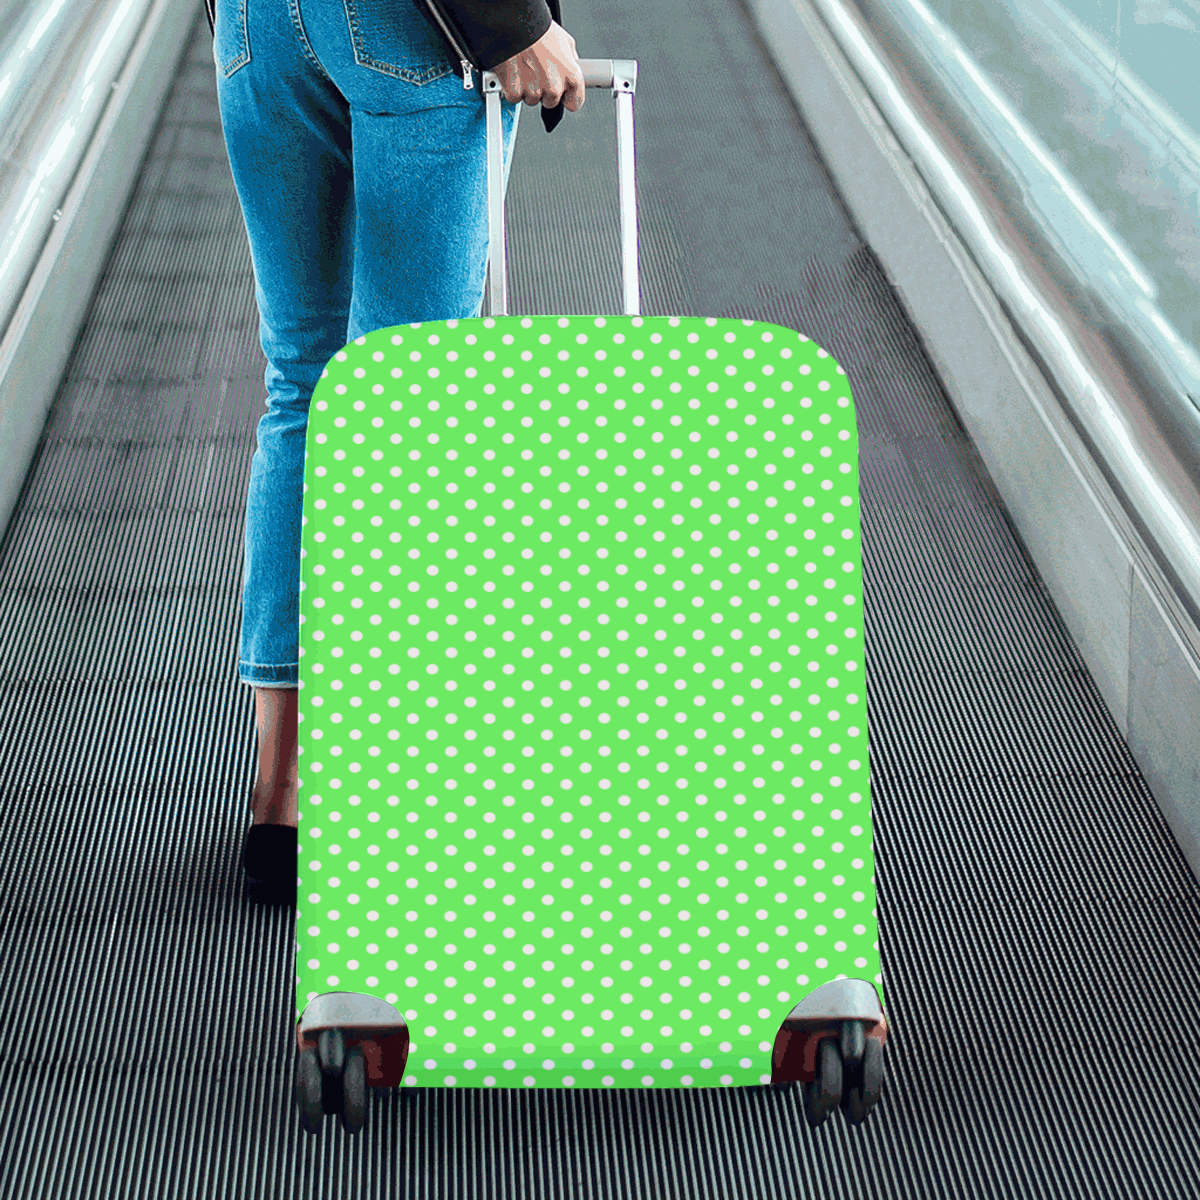 Eucalyptus green polka dots Luggage Cover/Large 26"-28"